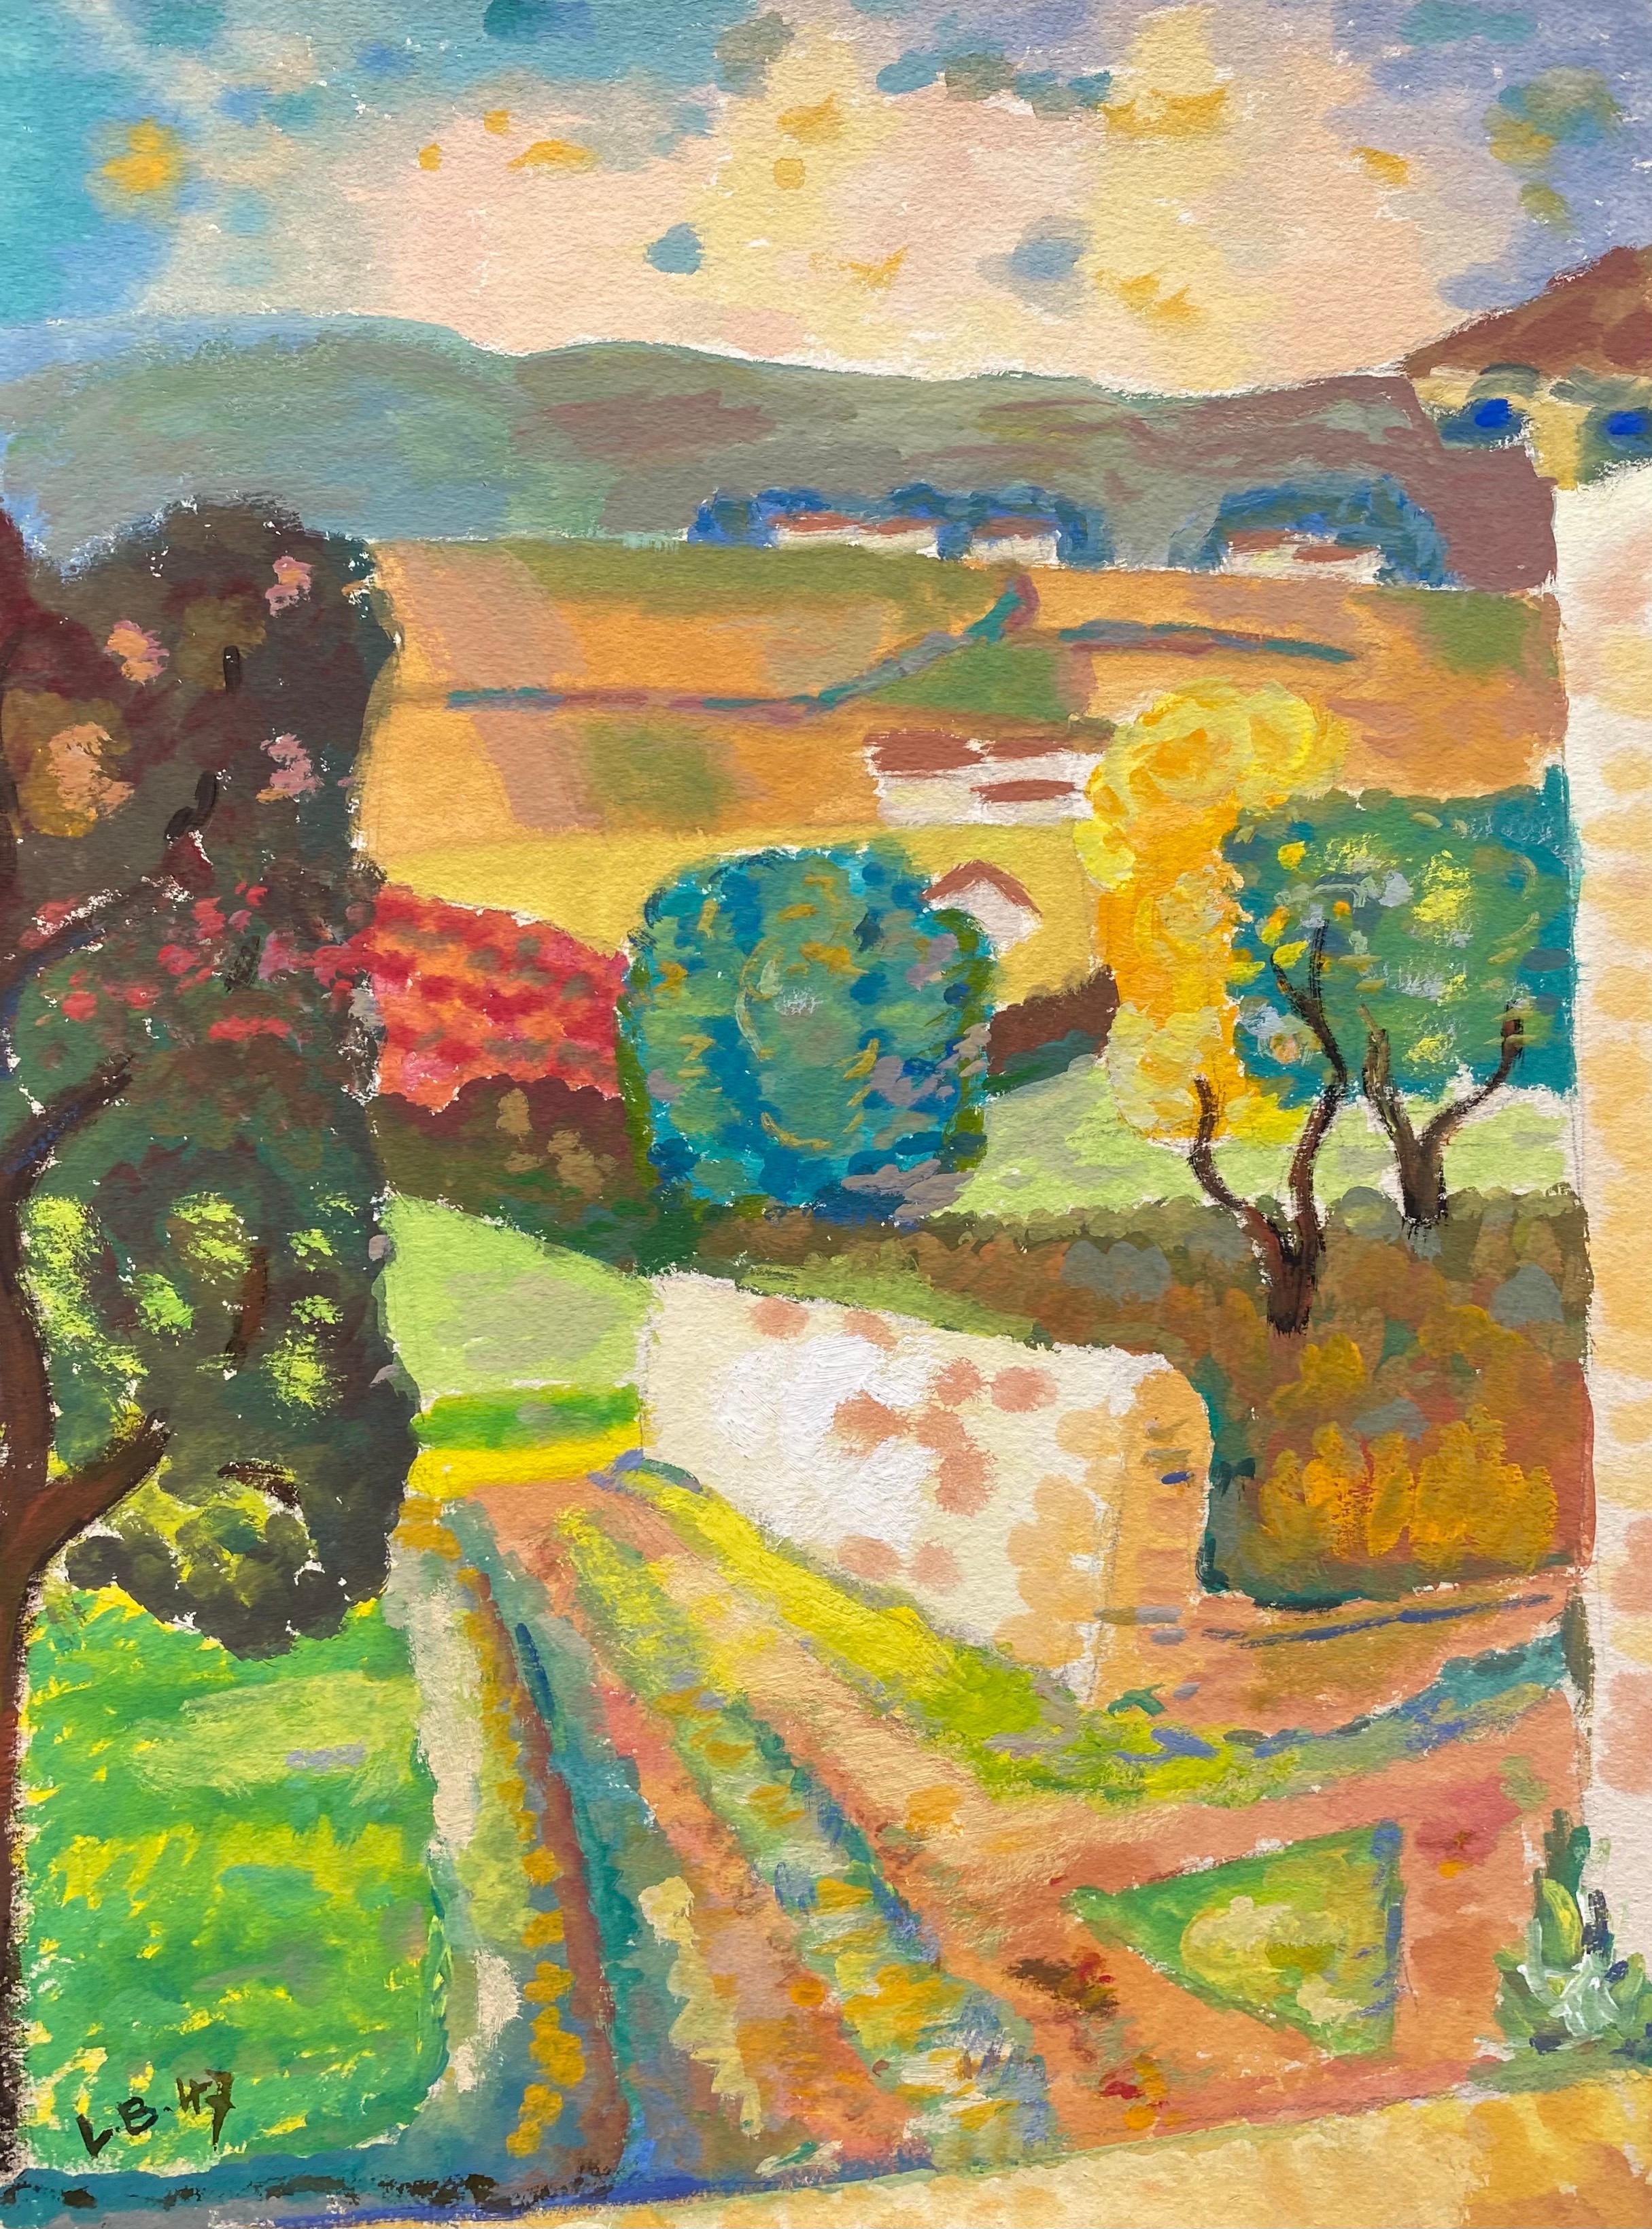 1940's Provence France Painting Landscape - Post Impressionist artist